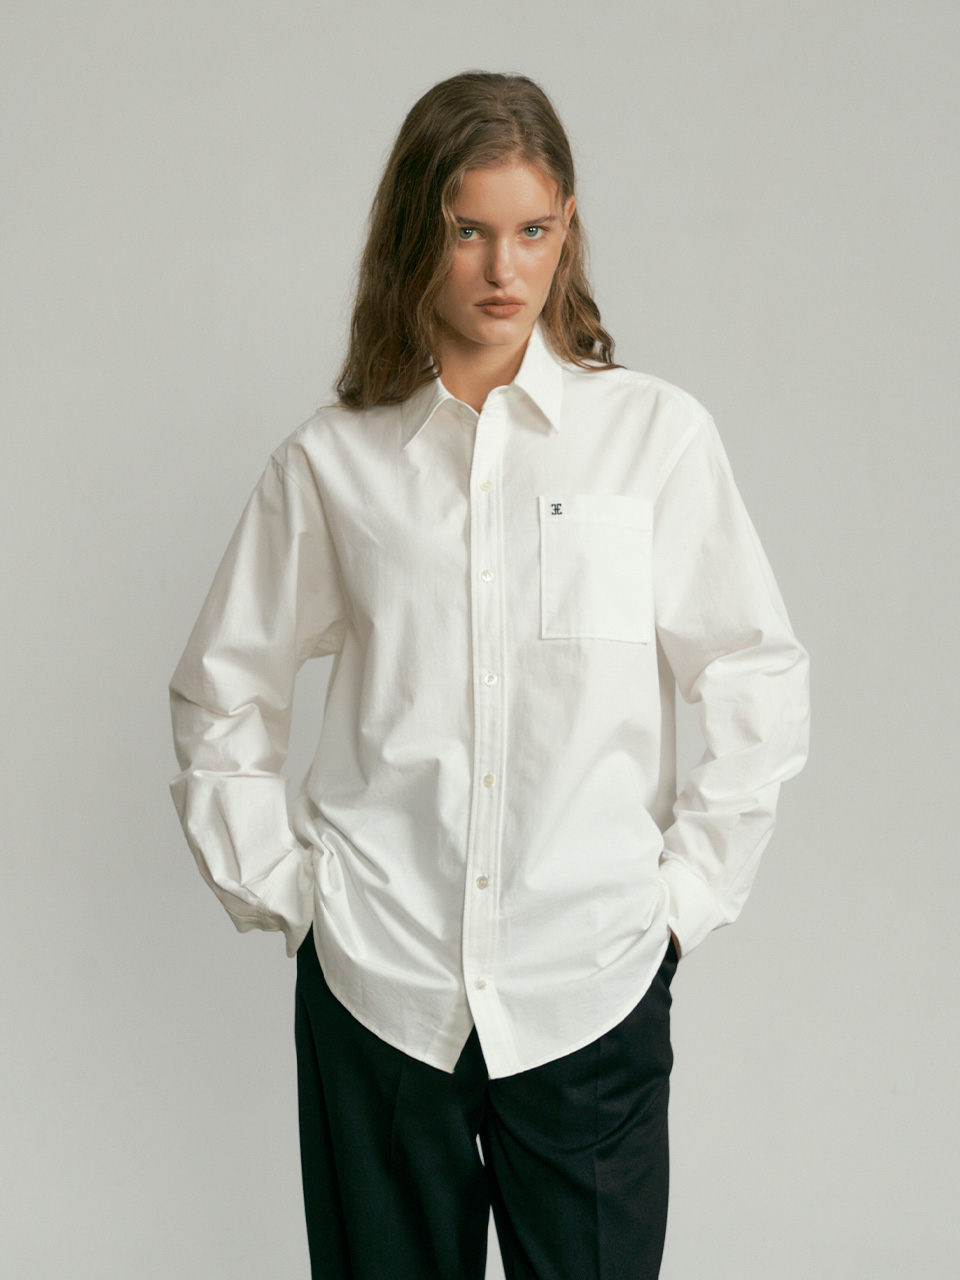 FOLNUA(フォルニュア) クラシックロゴオーバーフィットポケットシャツ / ホワイト